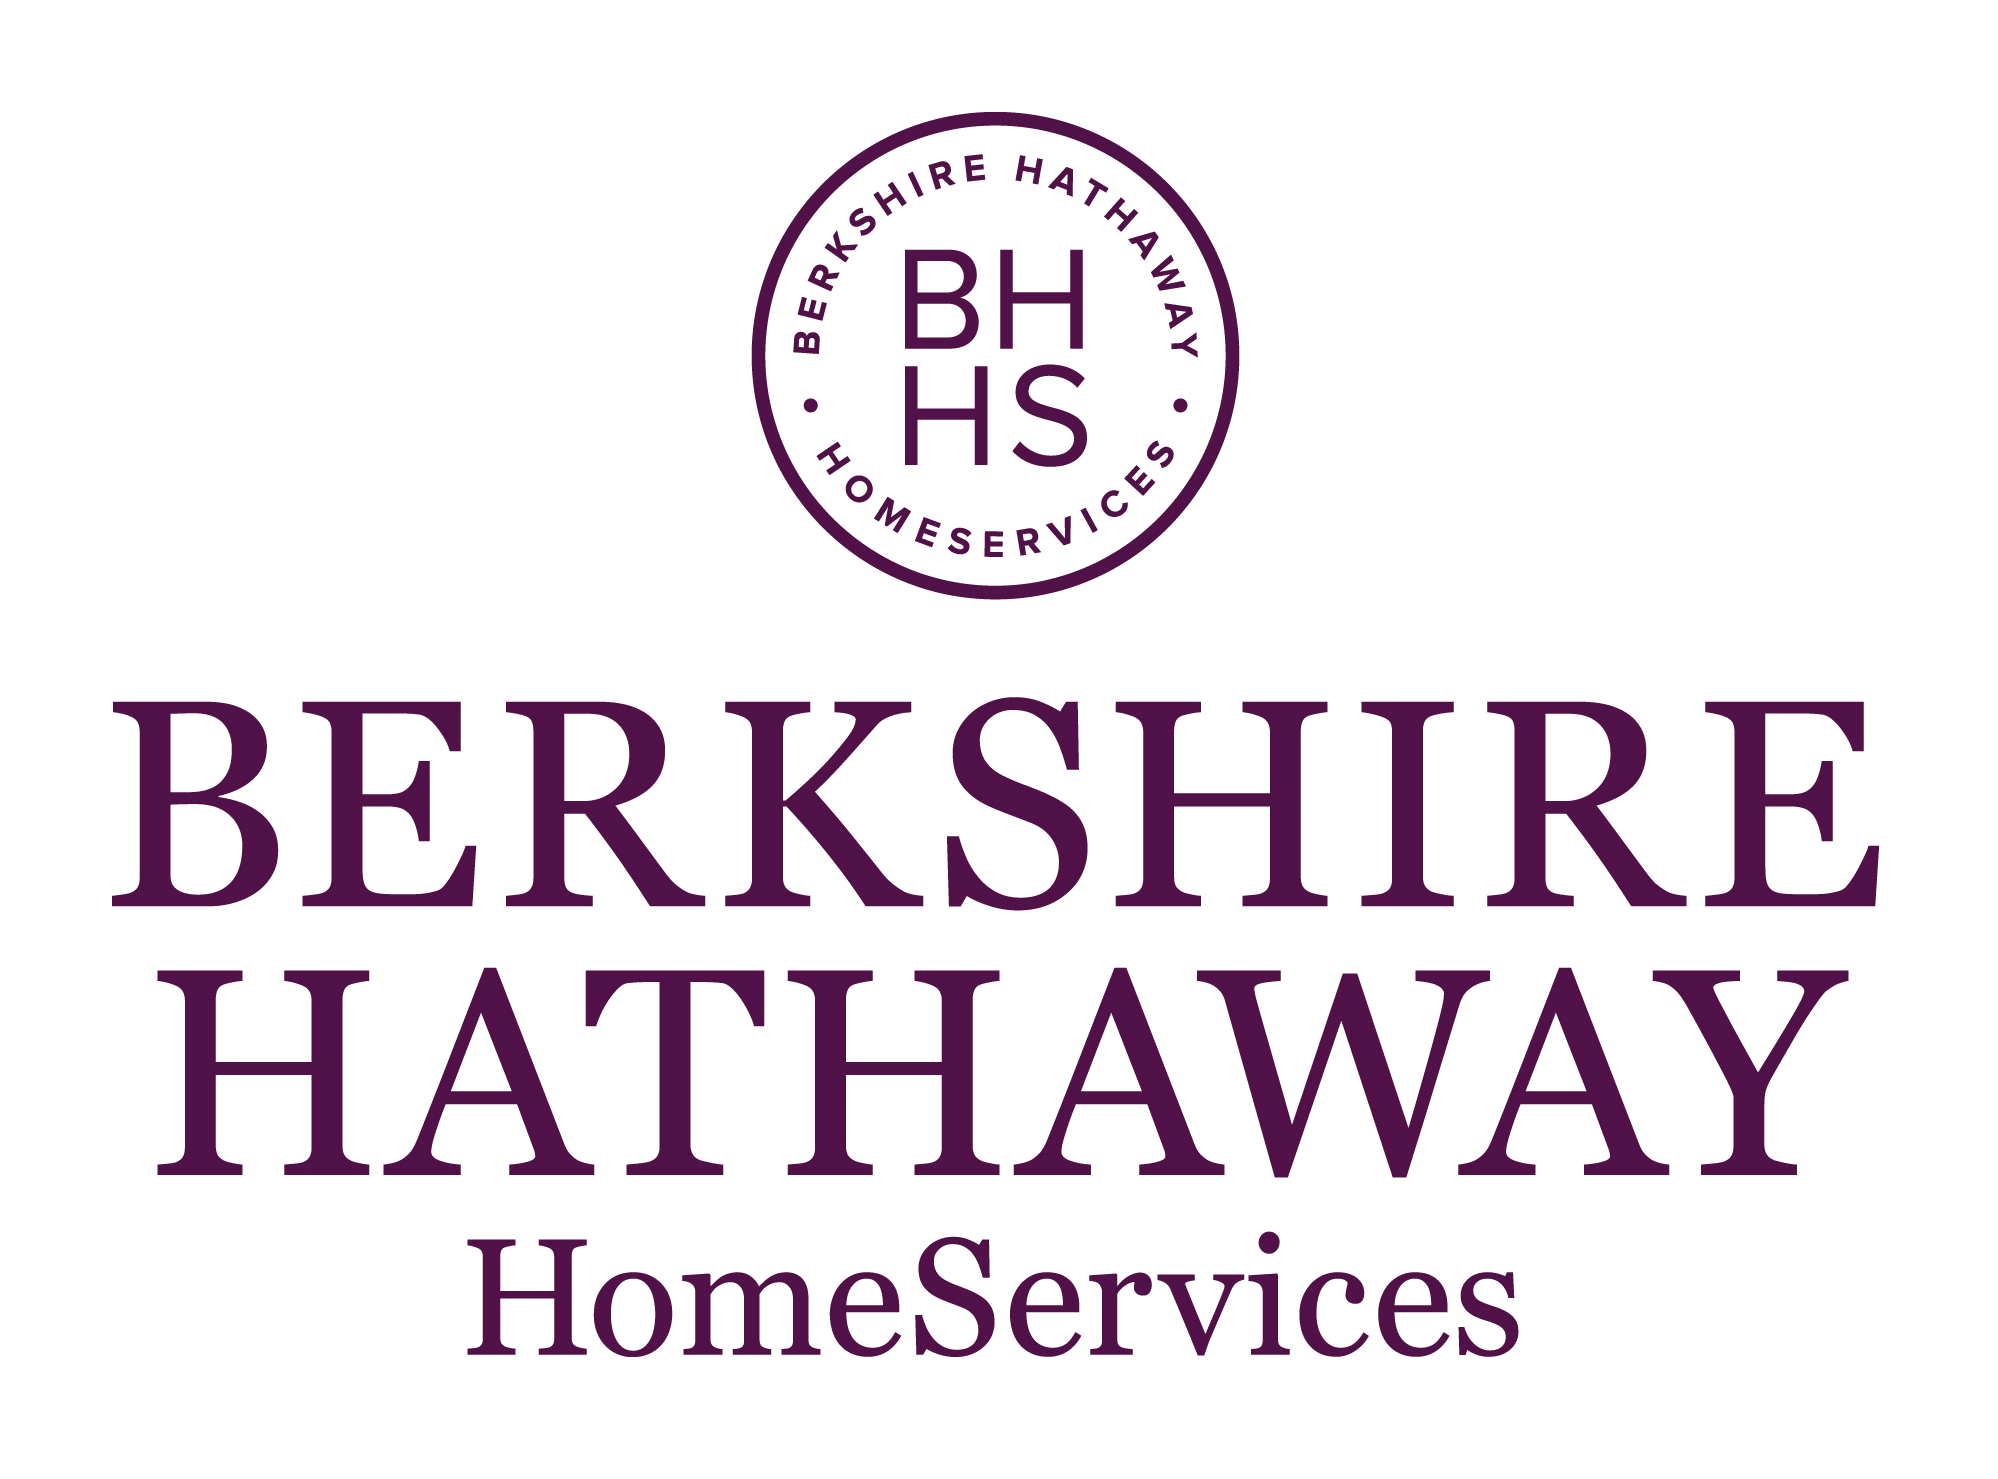 Berkshire Logo - Berkshire Hathaway Logo PNG Image - PurePNG | Free transparent CC0 ...